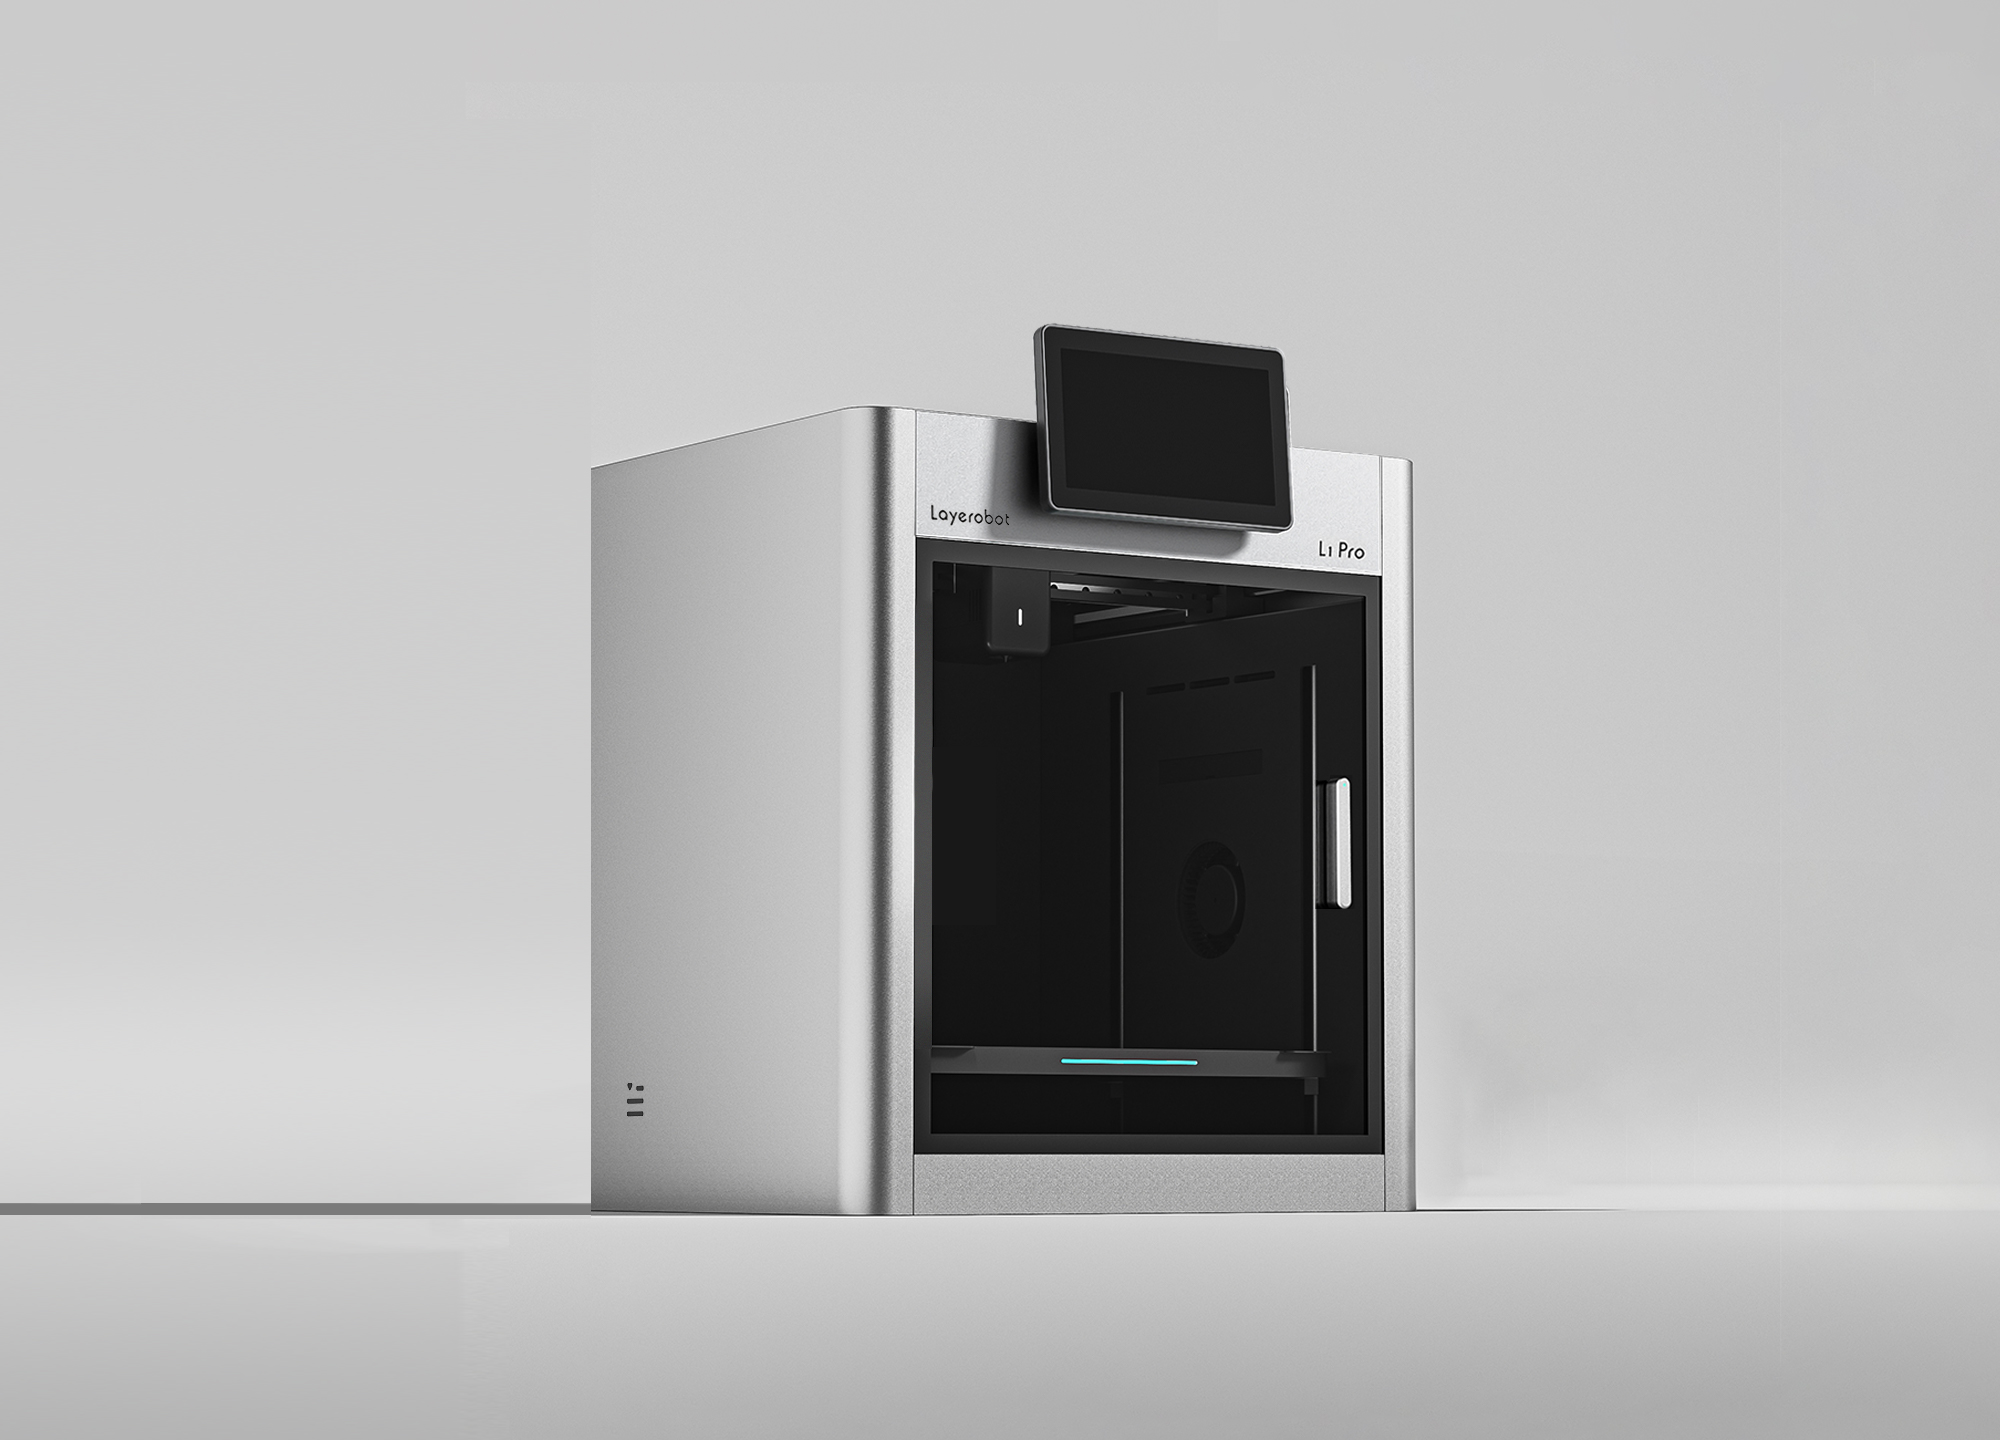 London Design Awards - The AI High-speed 3D Printer